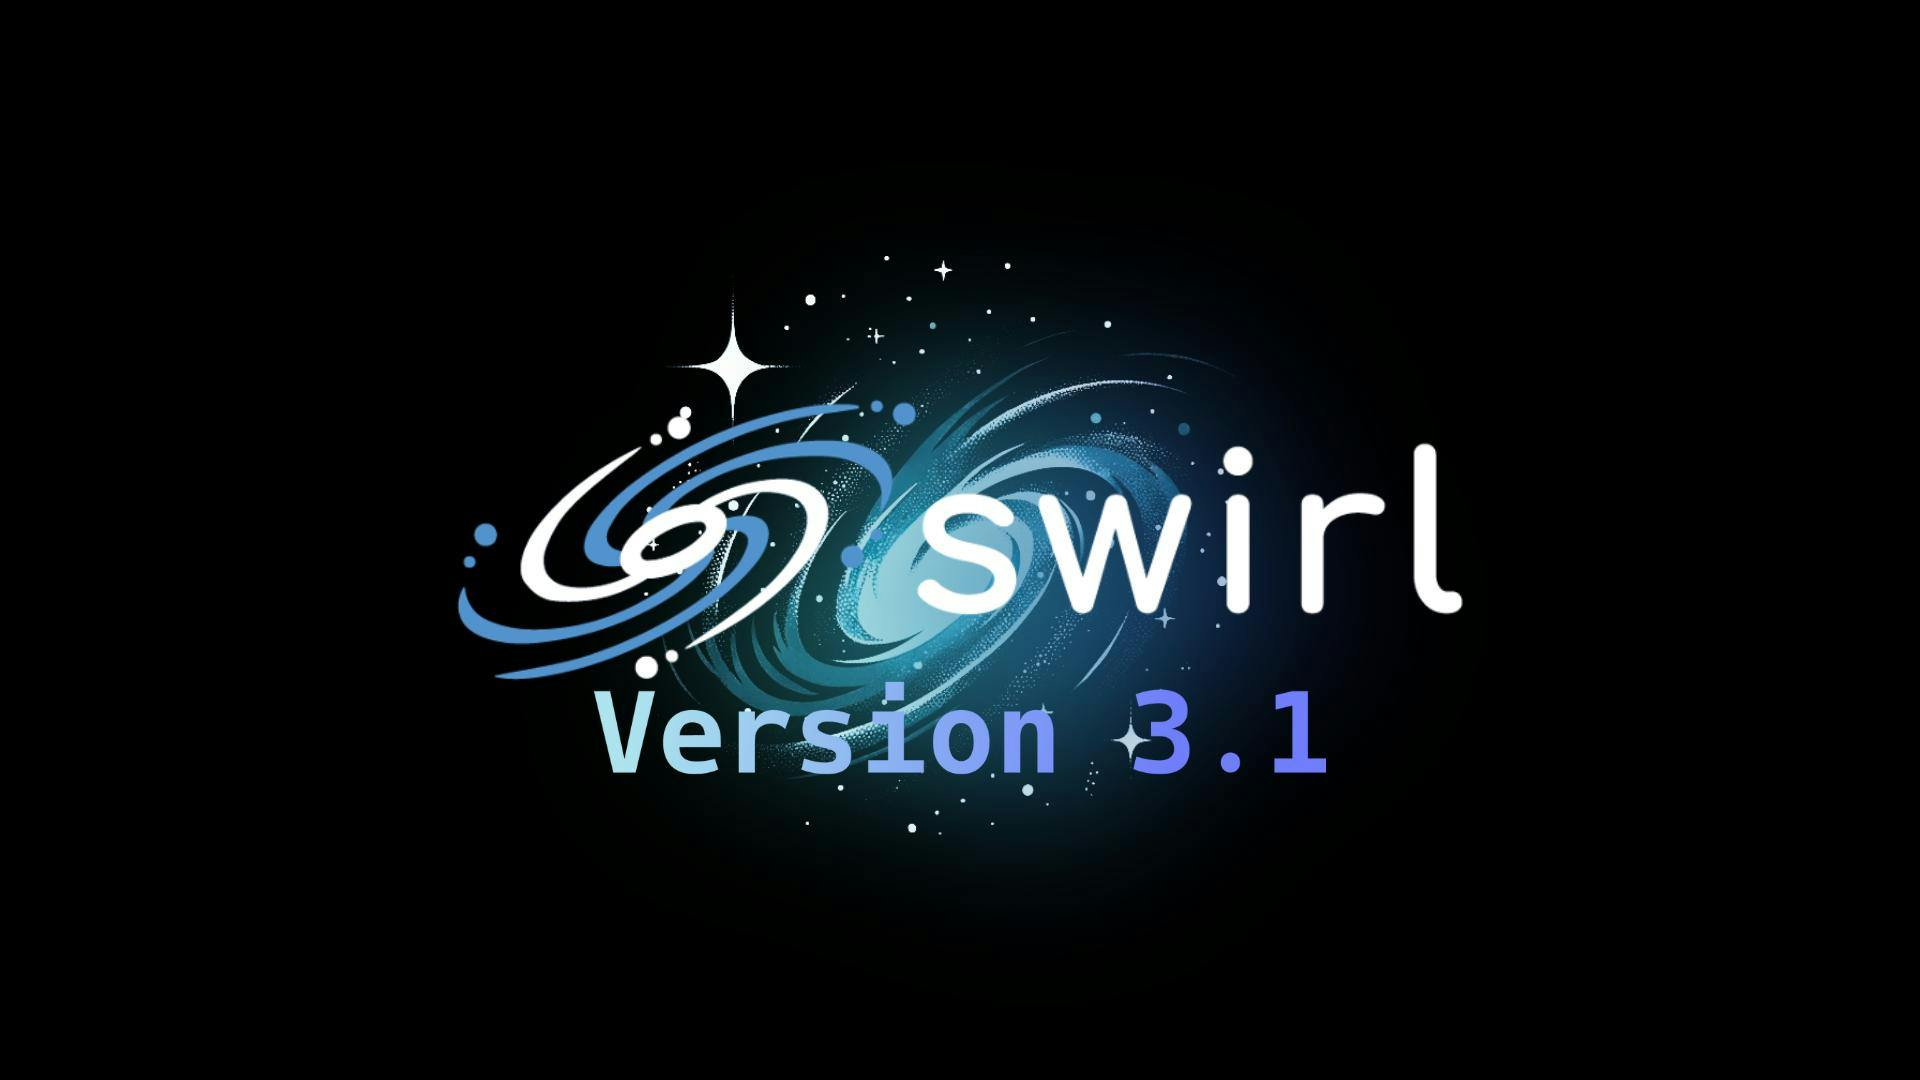 Swirl Version 3.1.0 Released